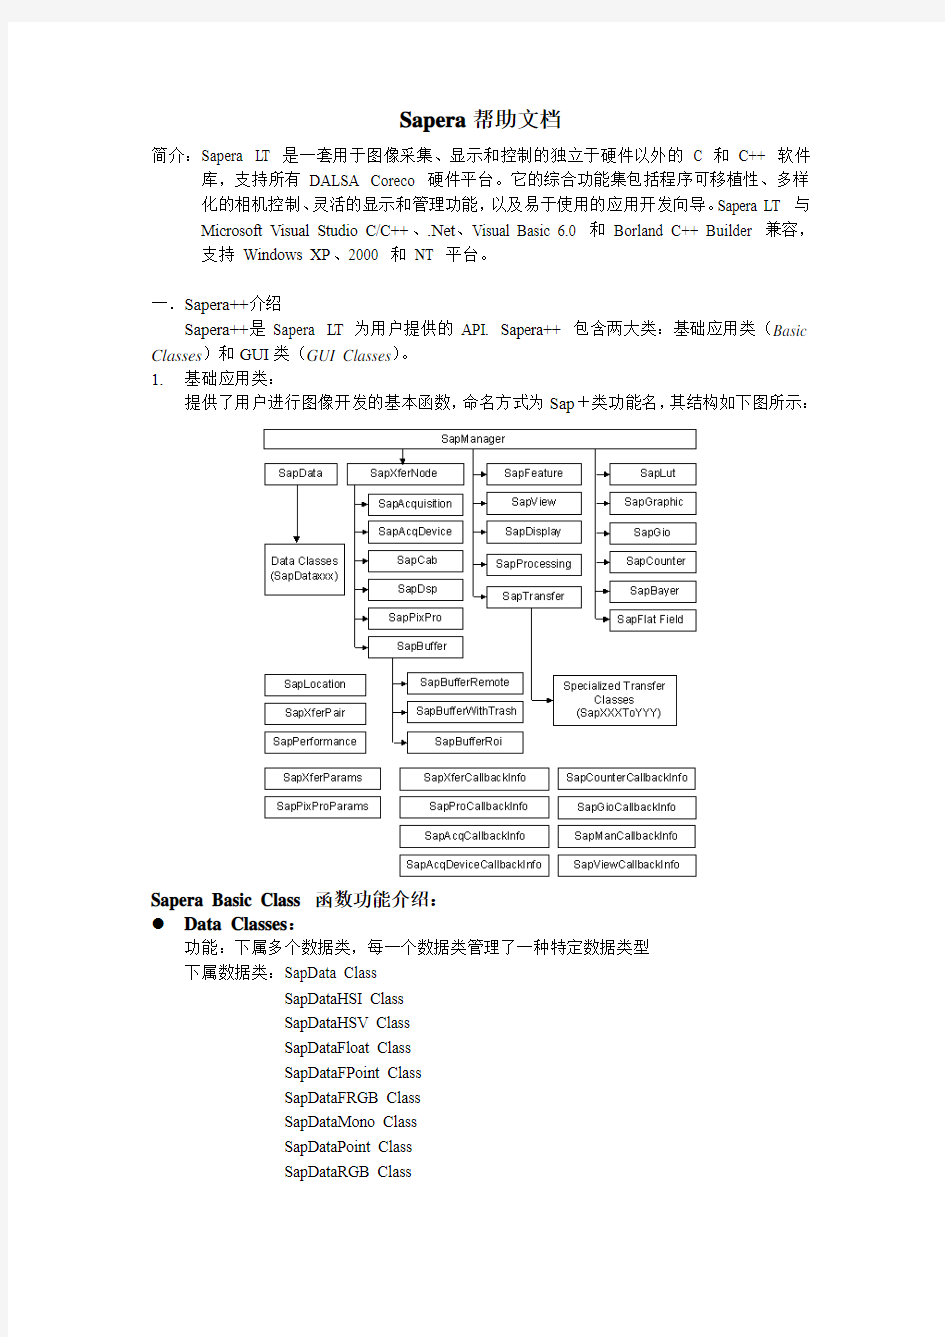 Sapera LT帮助文档 中文版分析